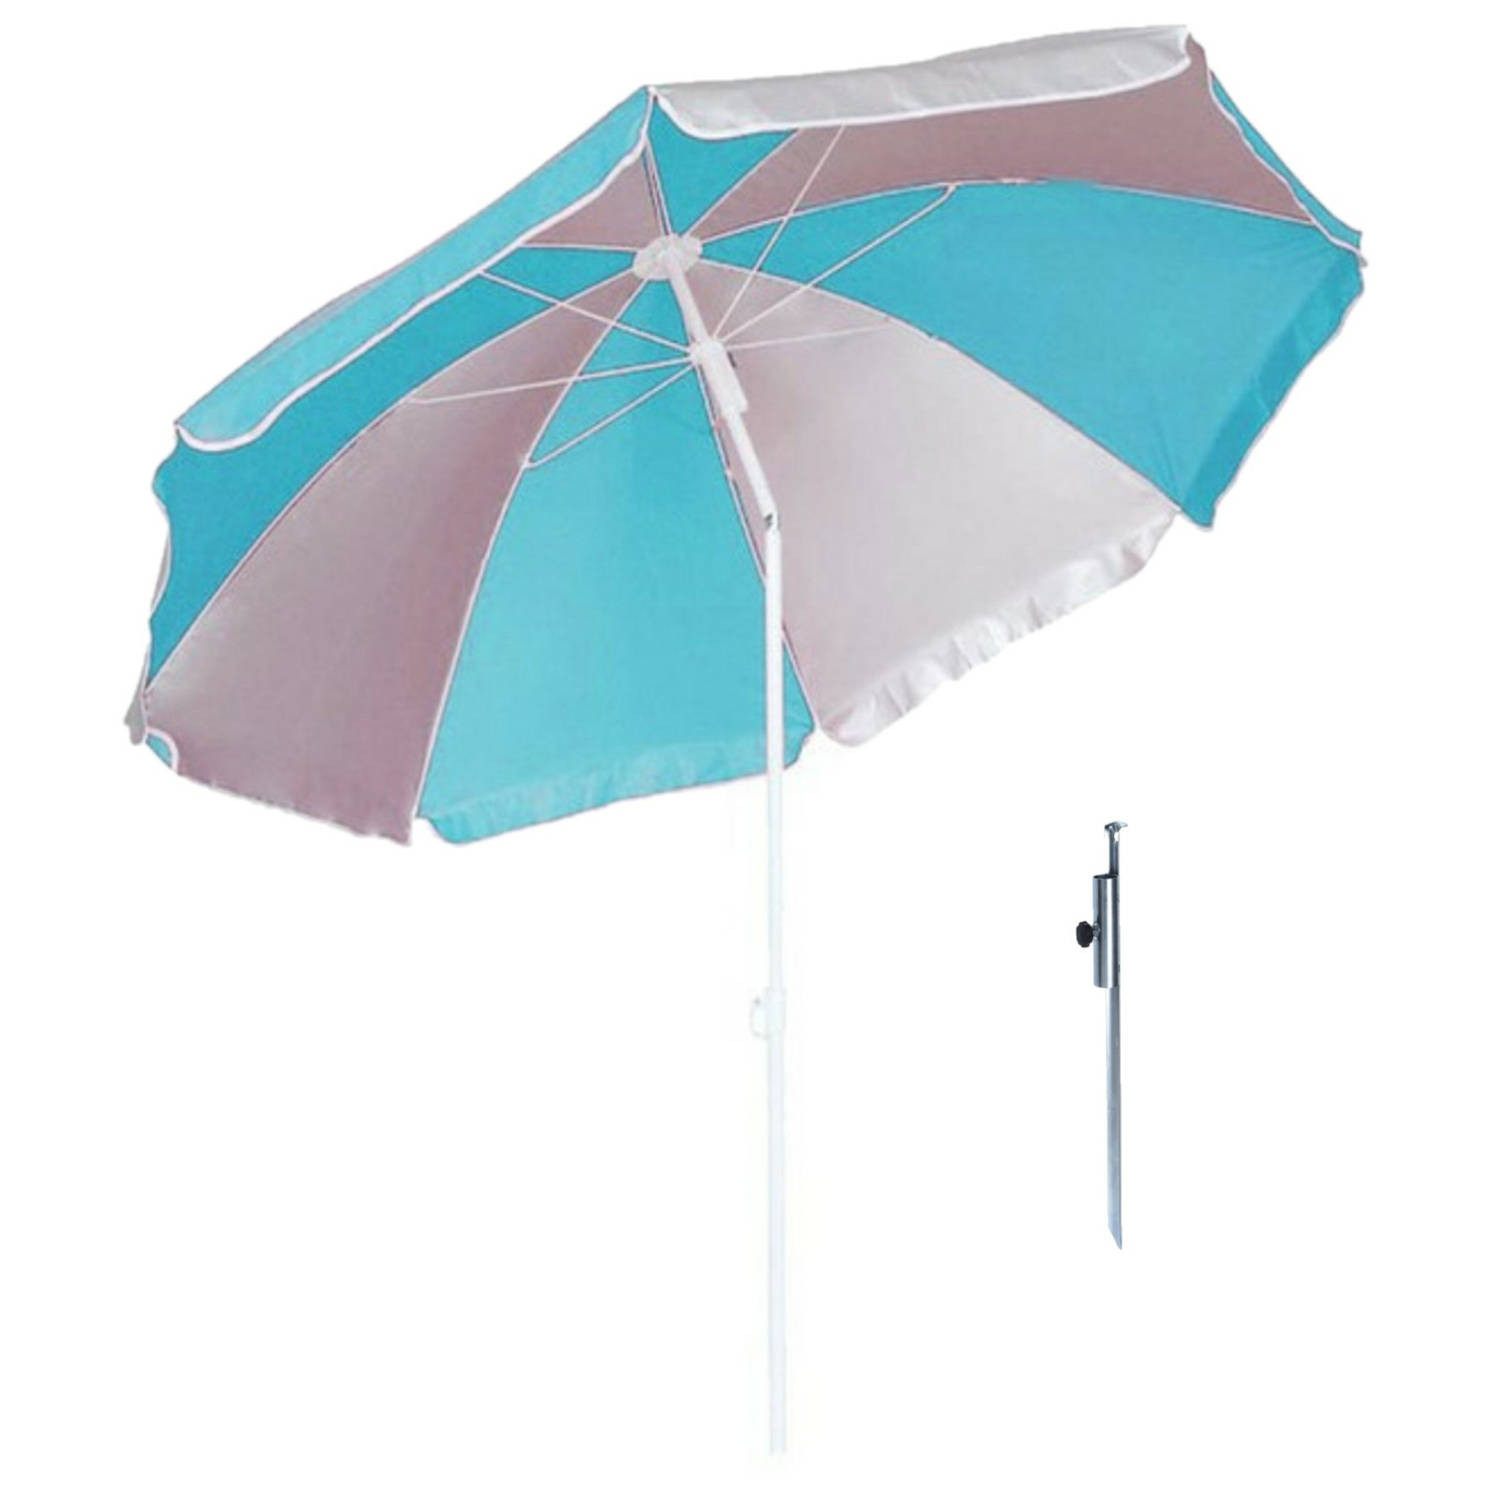 Parasol - Blauw/wit - D120 cm - incl. draagtas - parasolharing - 49 cm - Parasols